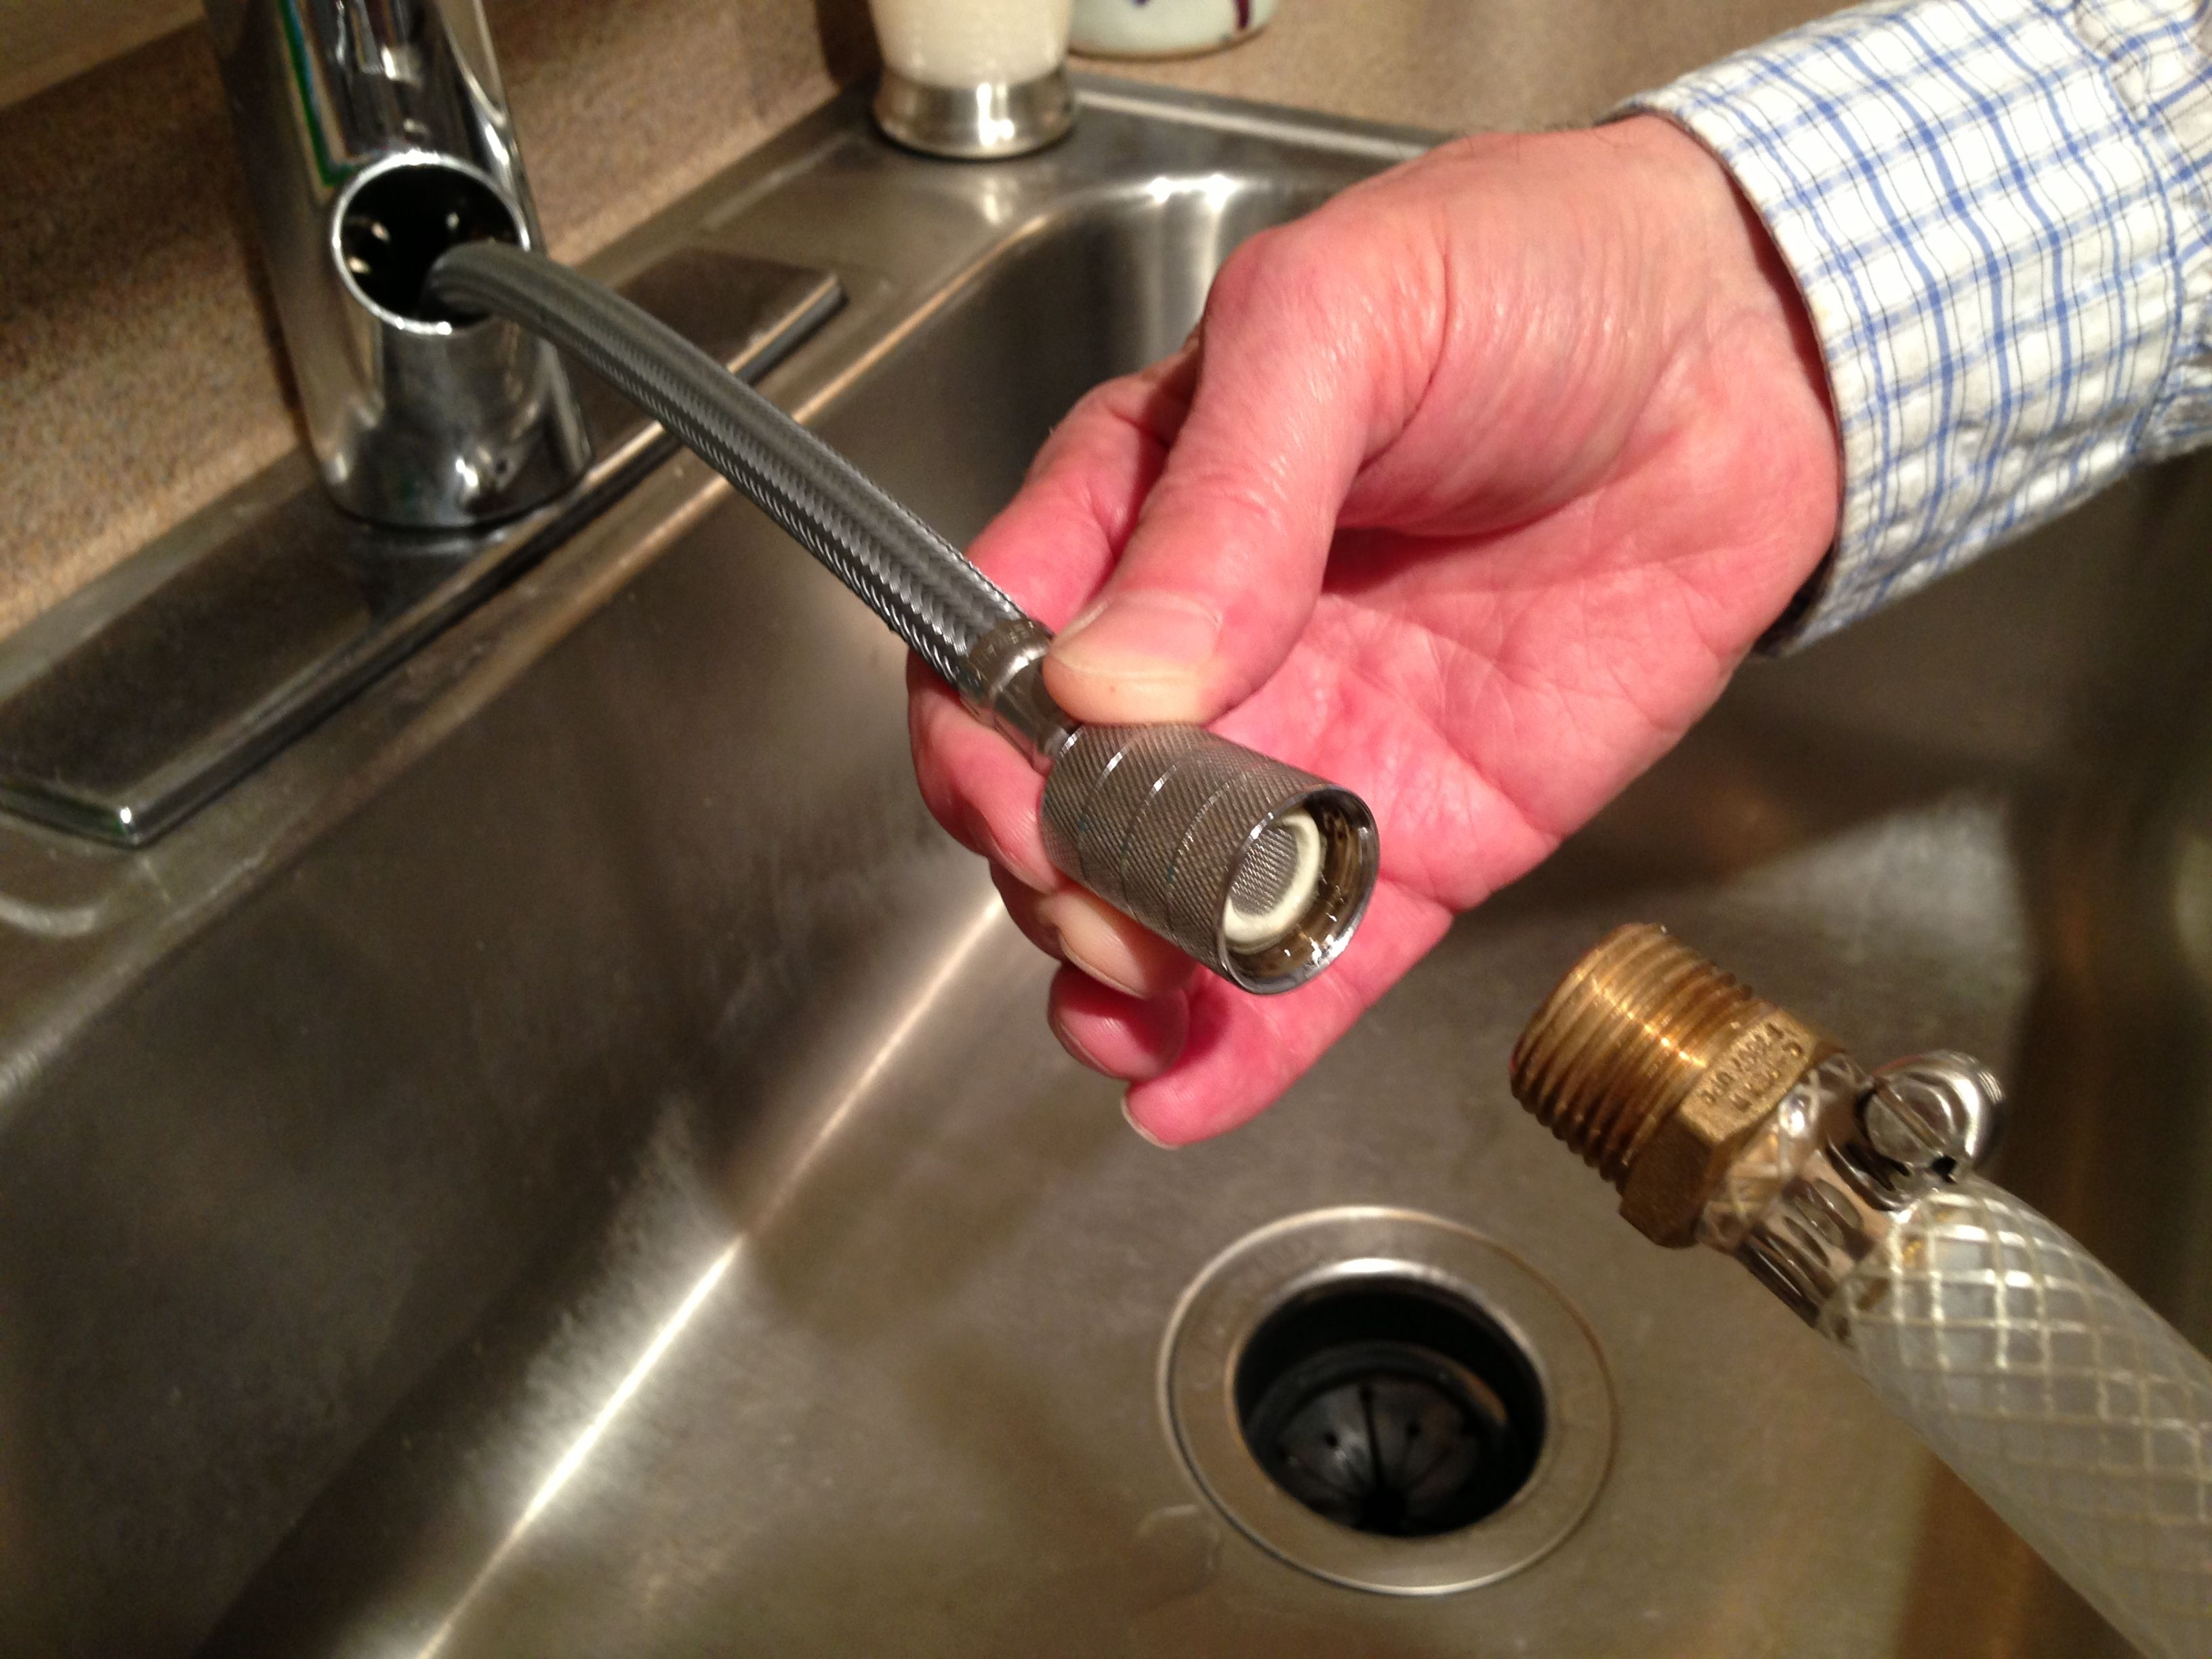 attach hose to bathroom sink